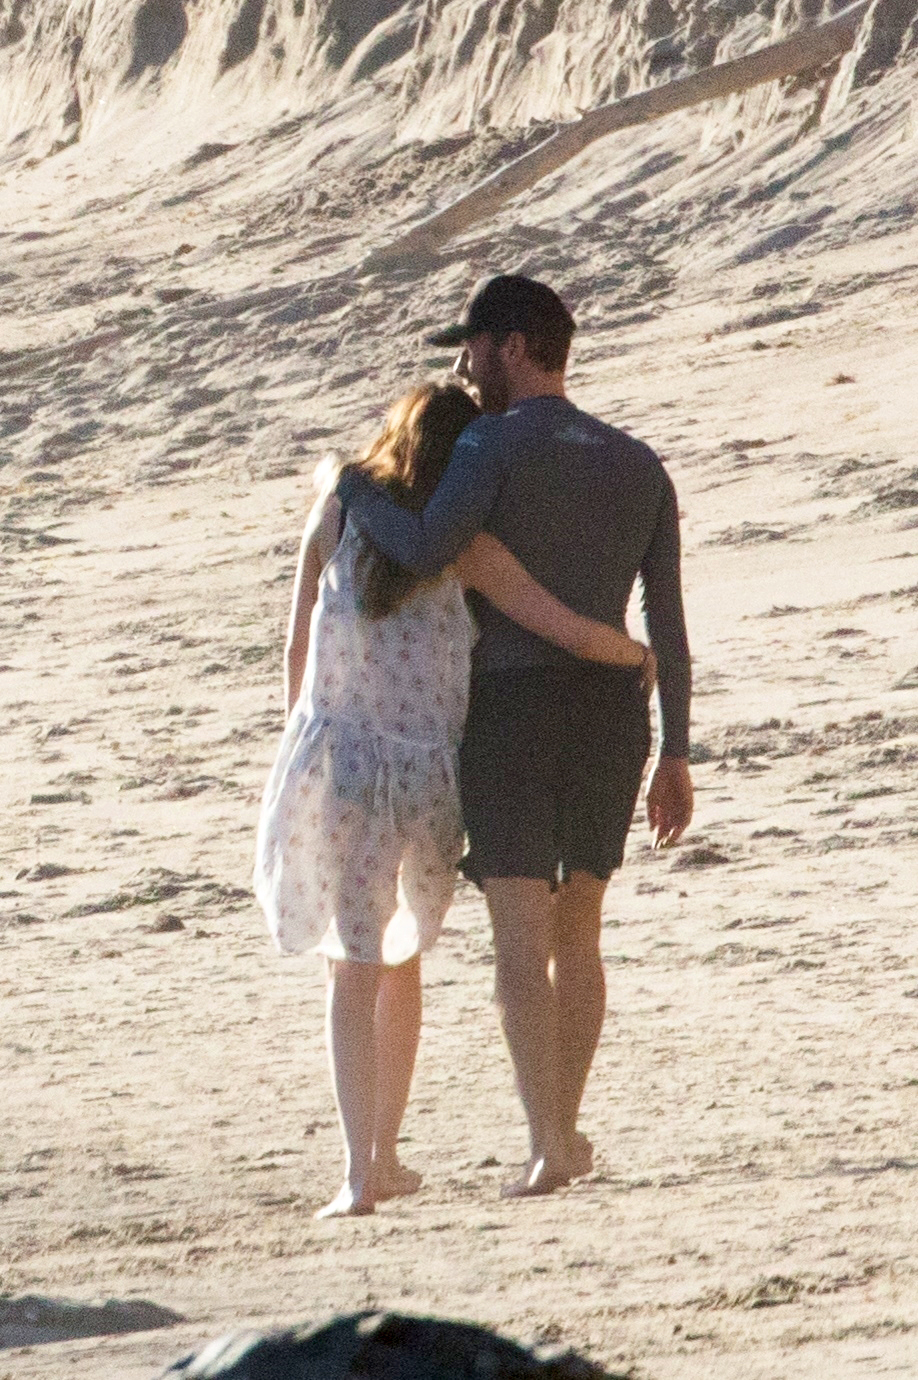 Chris Martin Dakota Johnson Have Malibu Beach Date Pics 